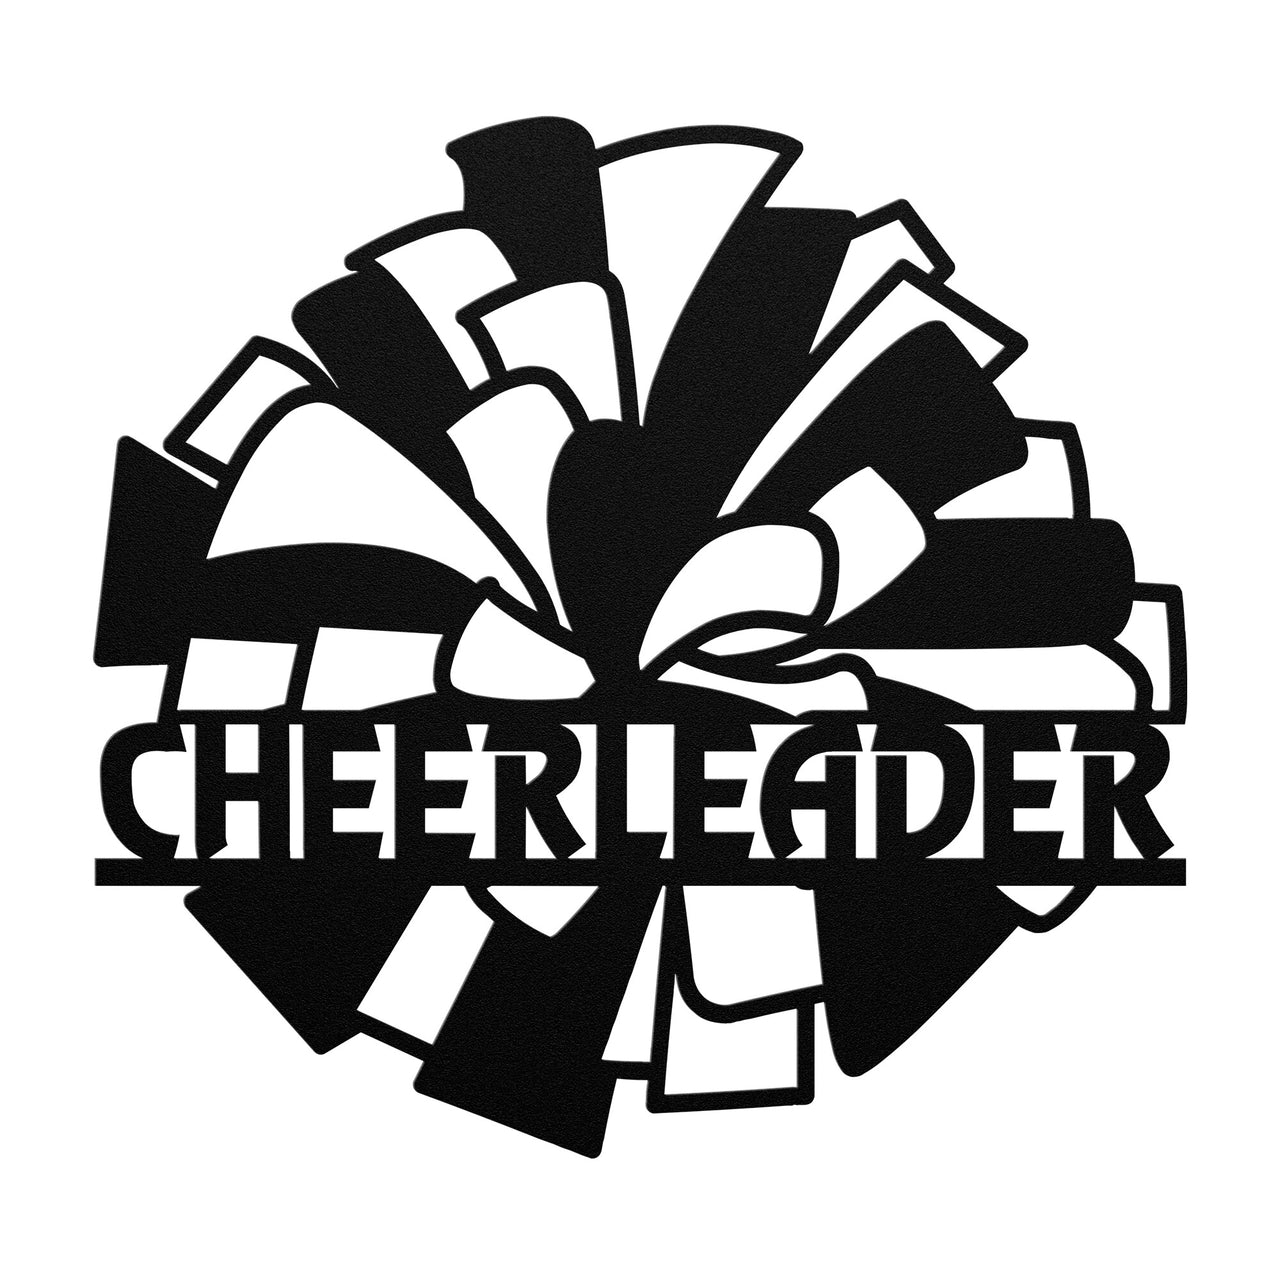 Cheerleader - Pom-pons